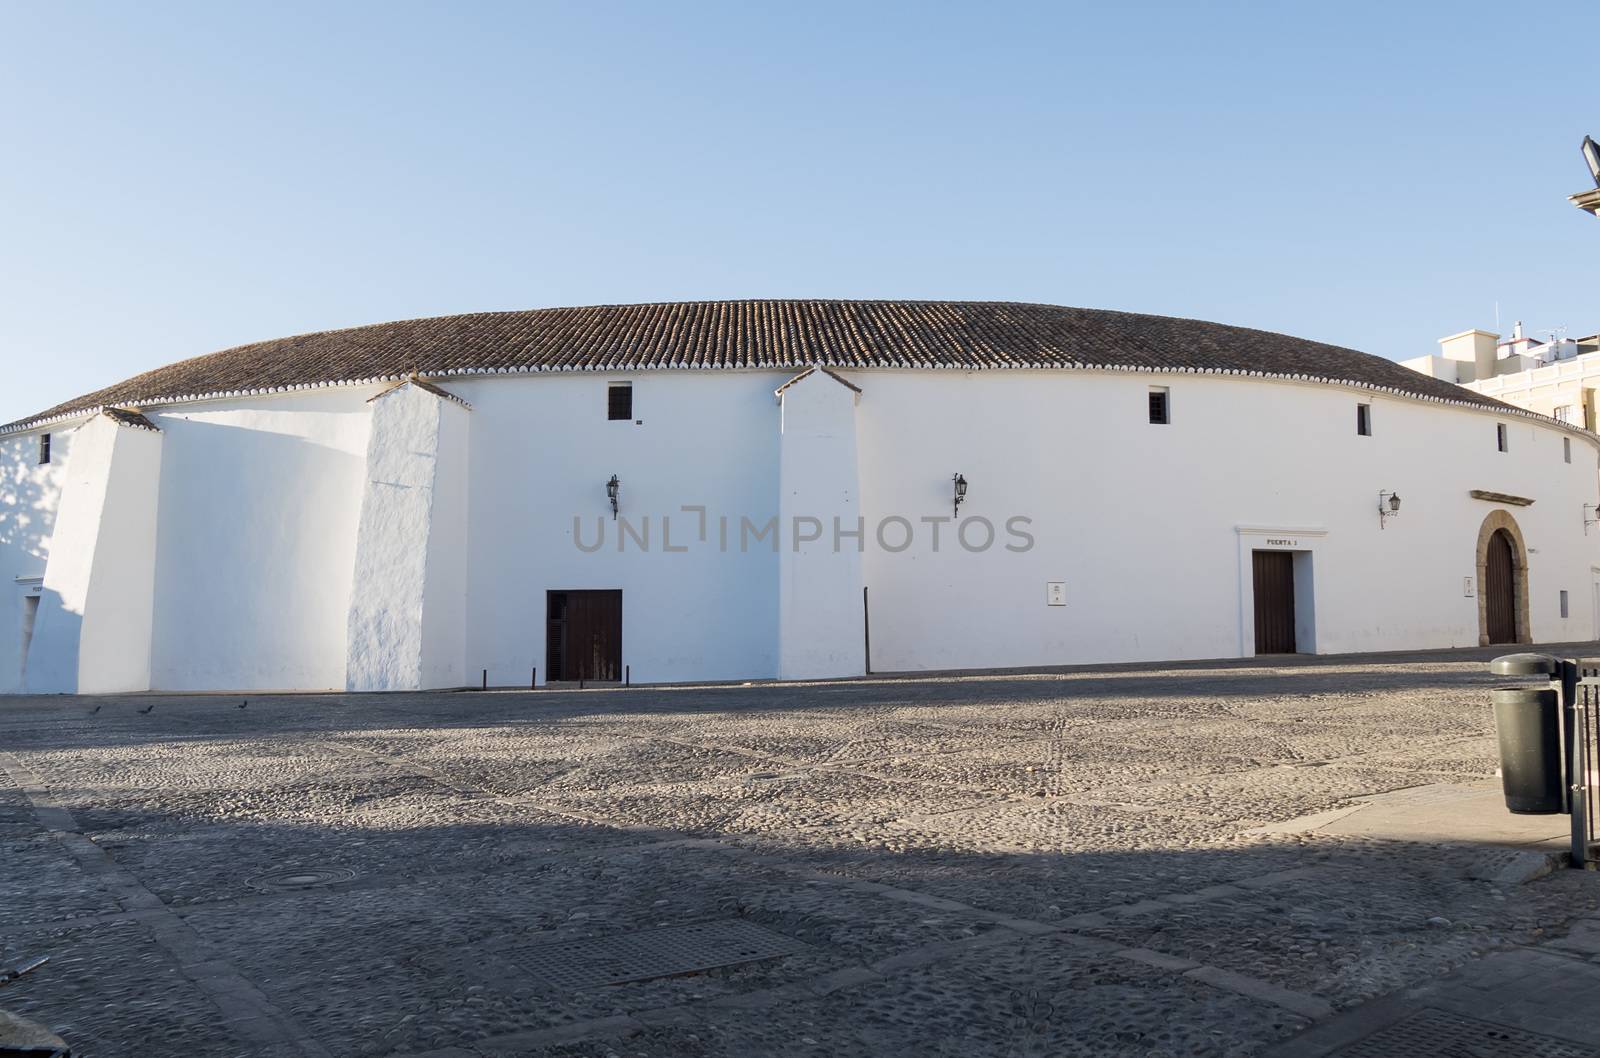 Exterior view of the bullring in Ronda, Malaga, Spain